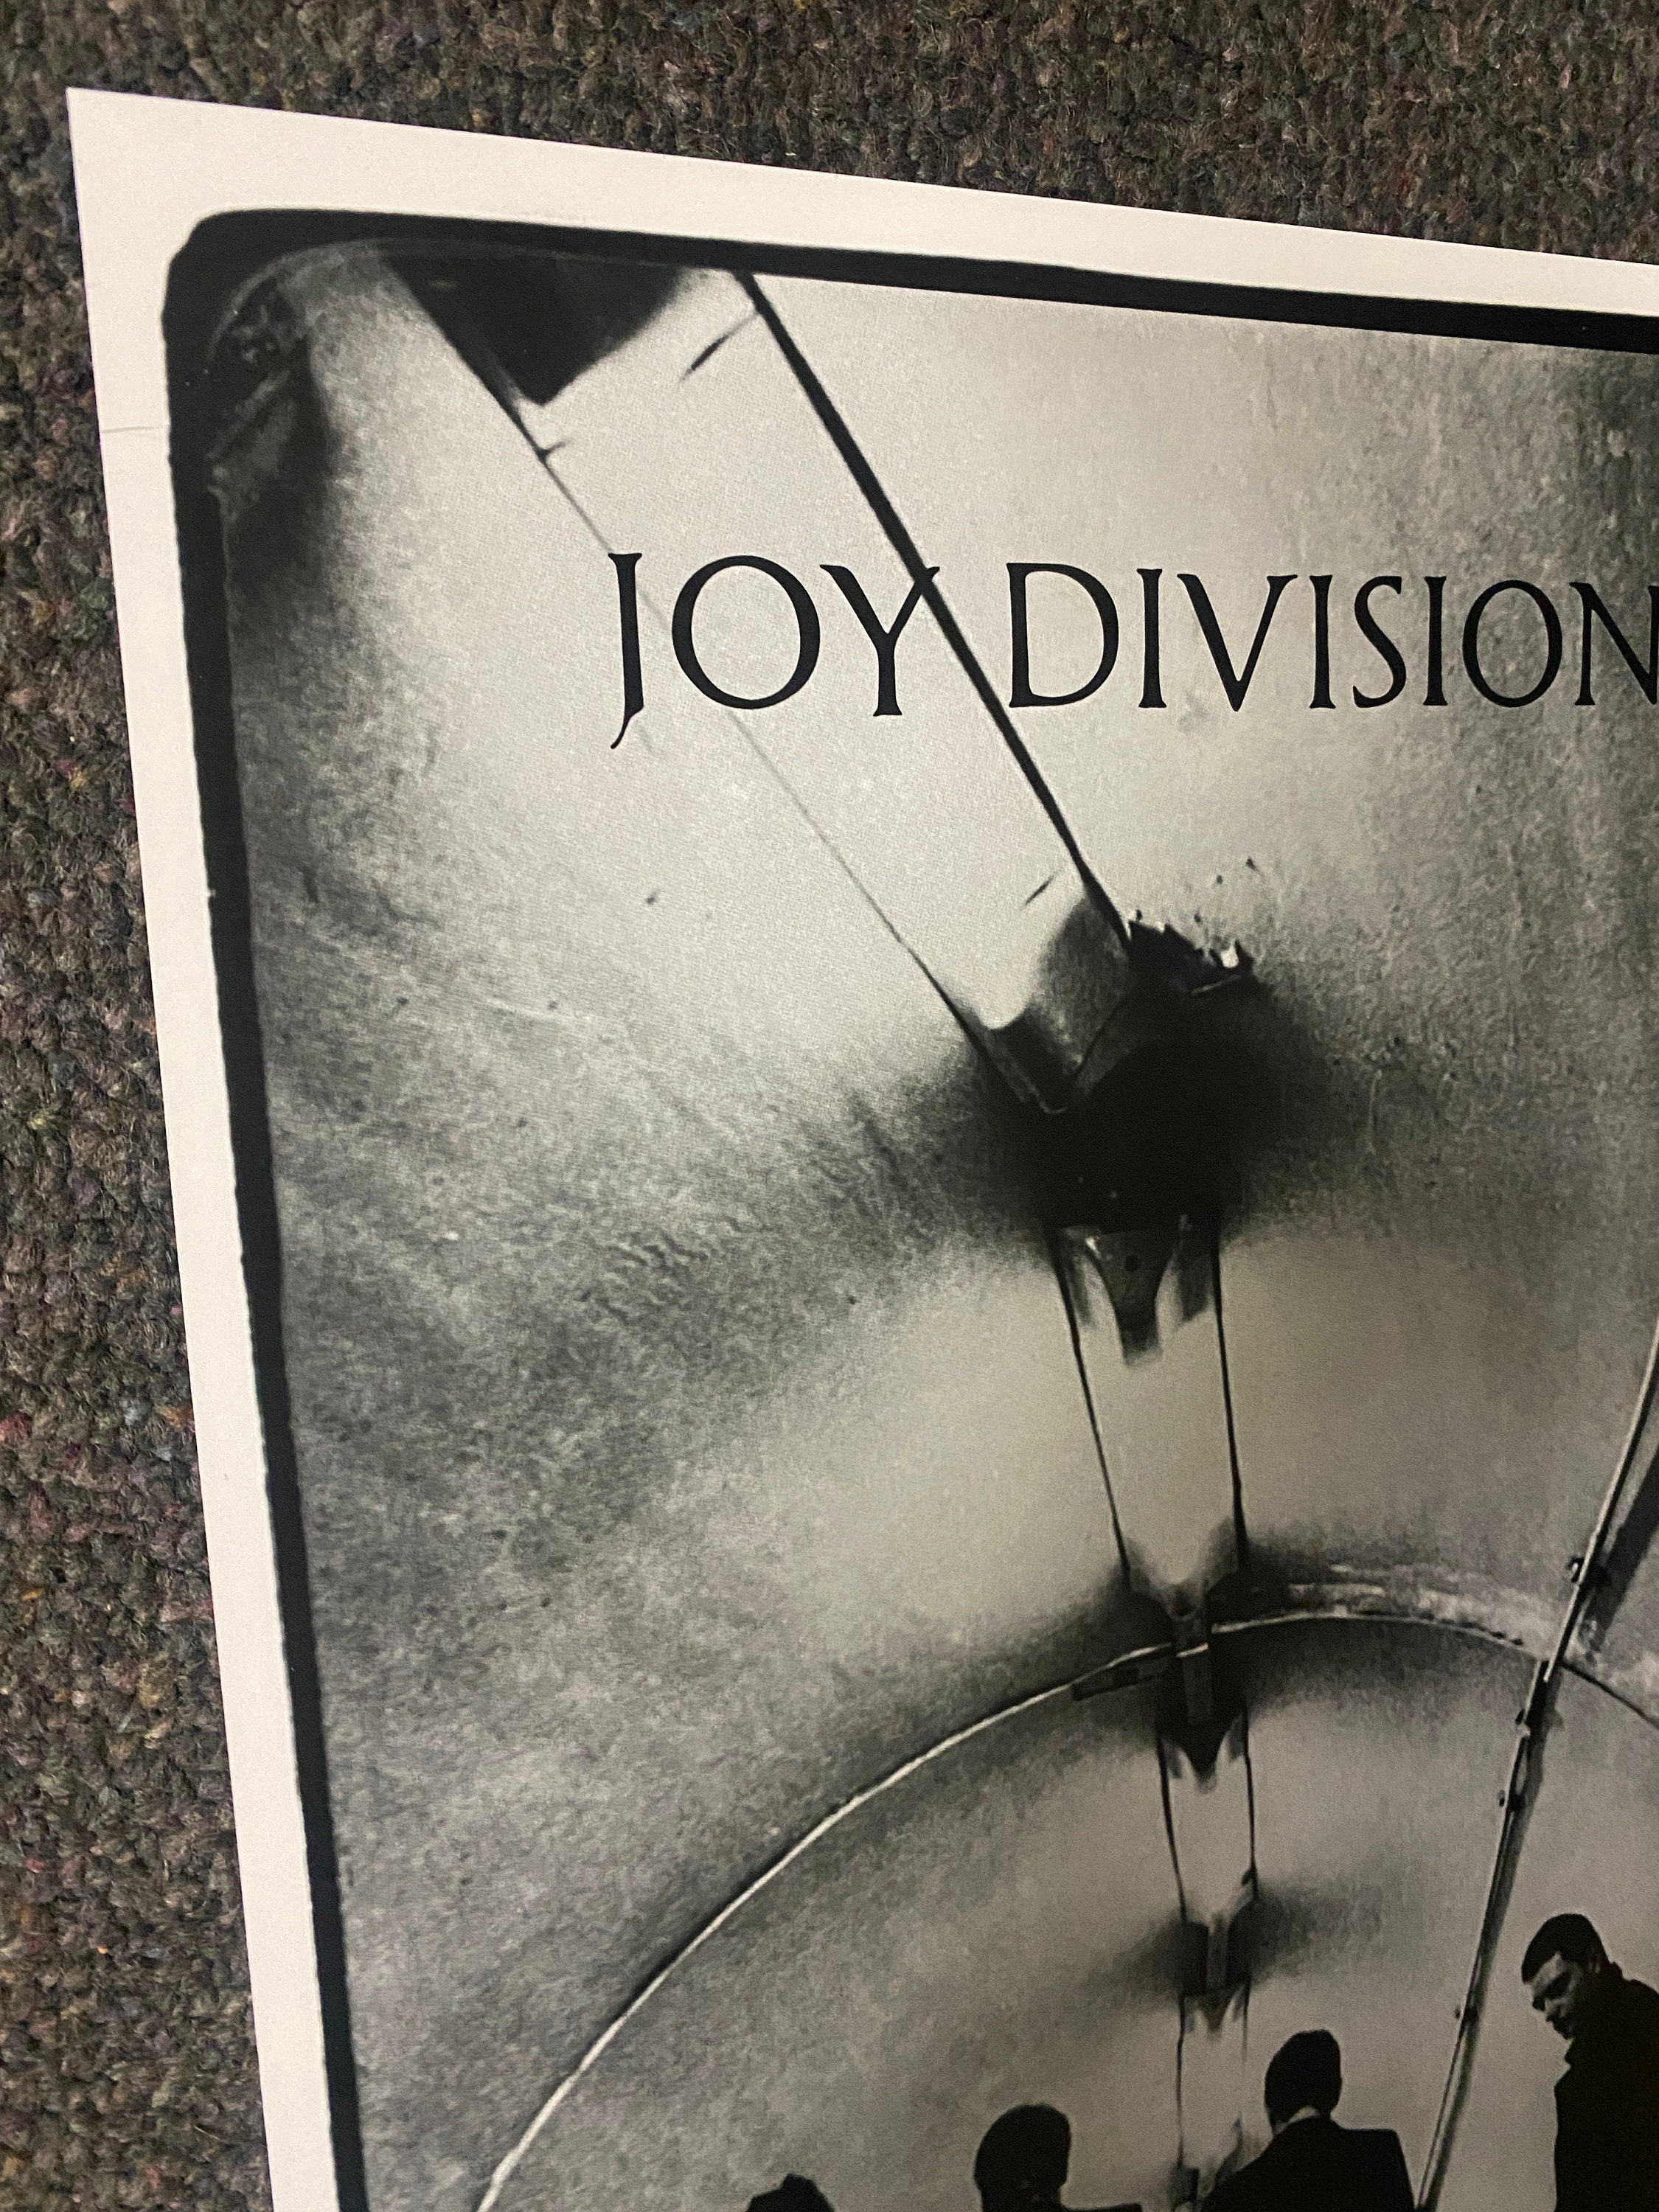 Discover Joy Division - Subway - Anton Corbijn - 11x17 Poster Print